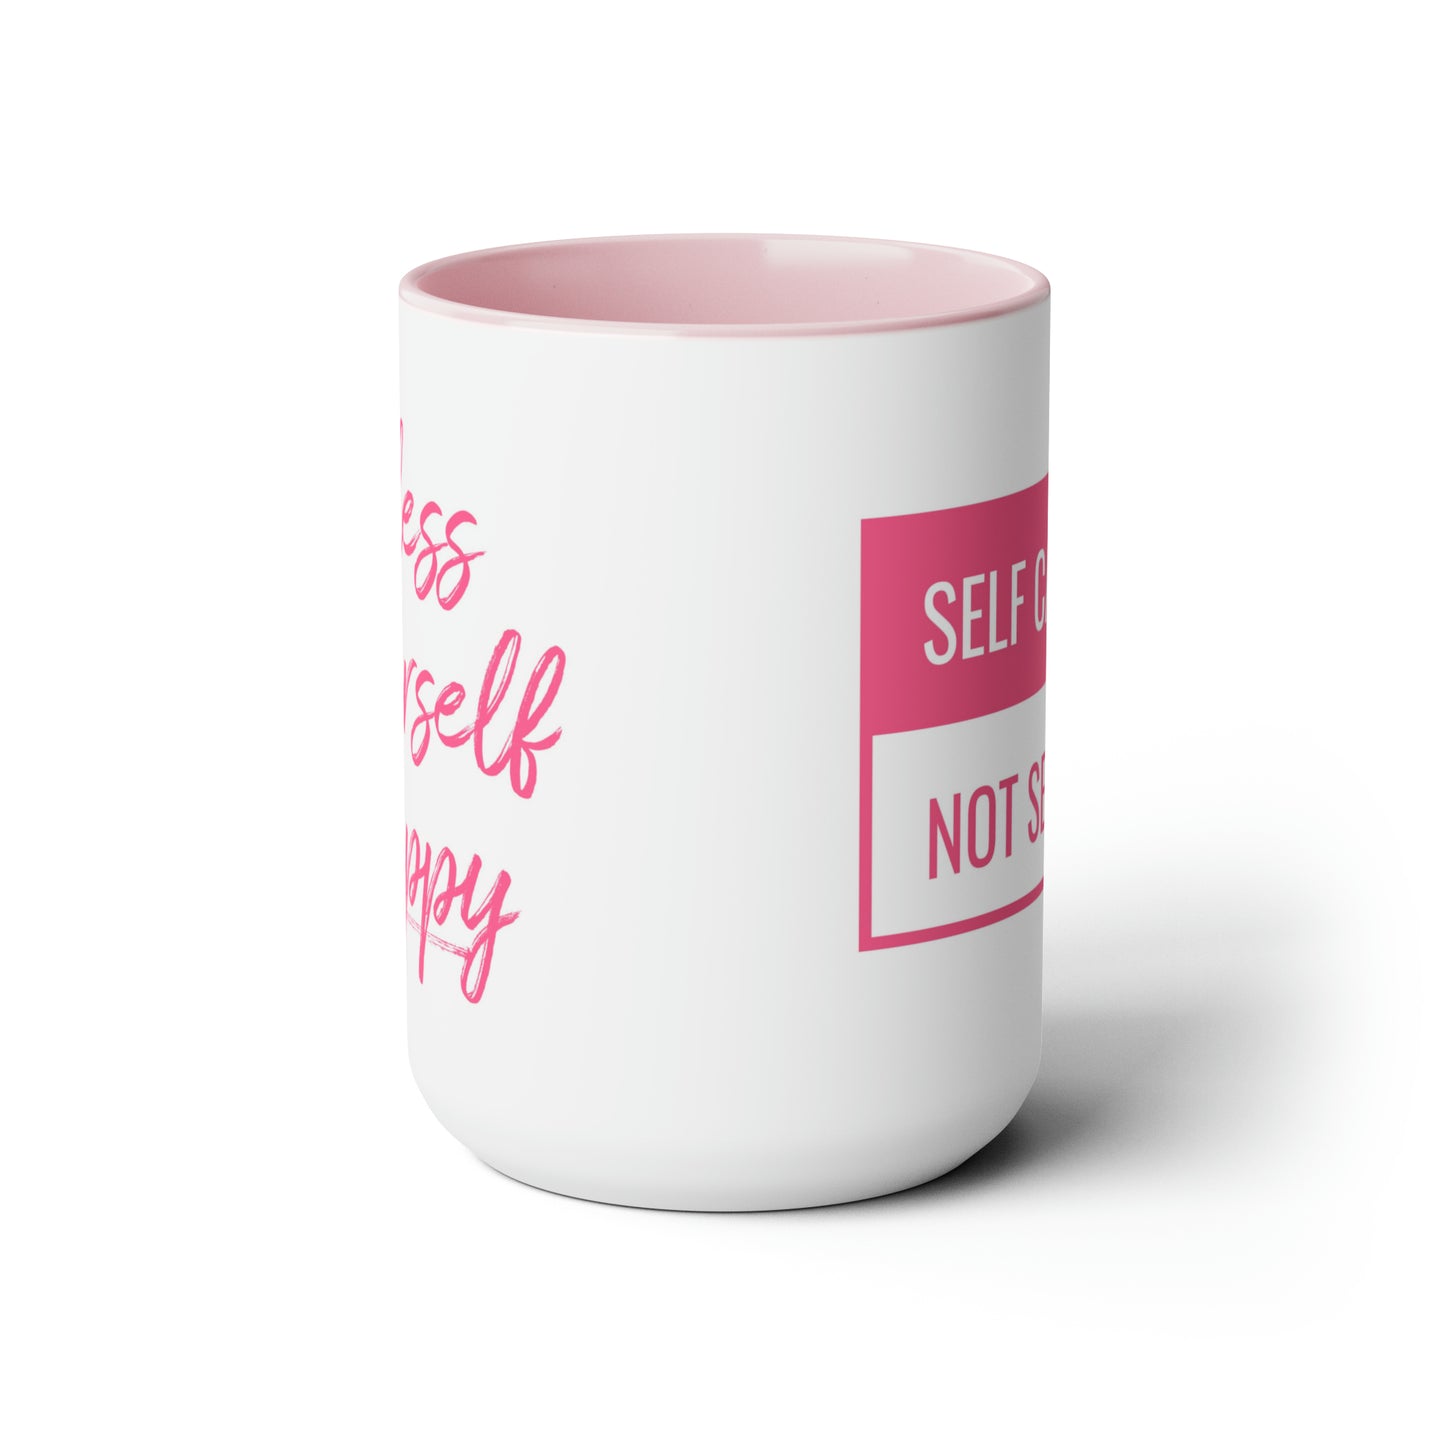 Bless Yourself Happy - Self Care Is Not Selfish - High Vibe Coffee Mug